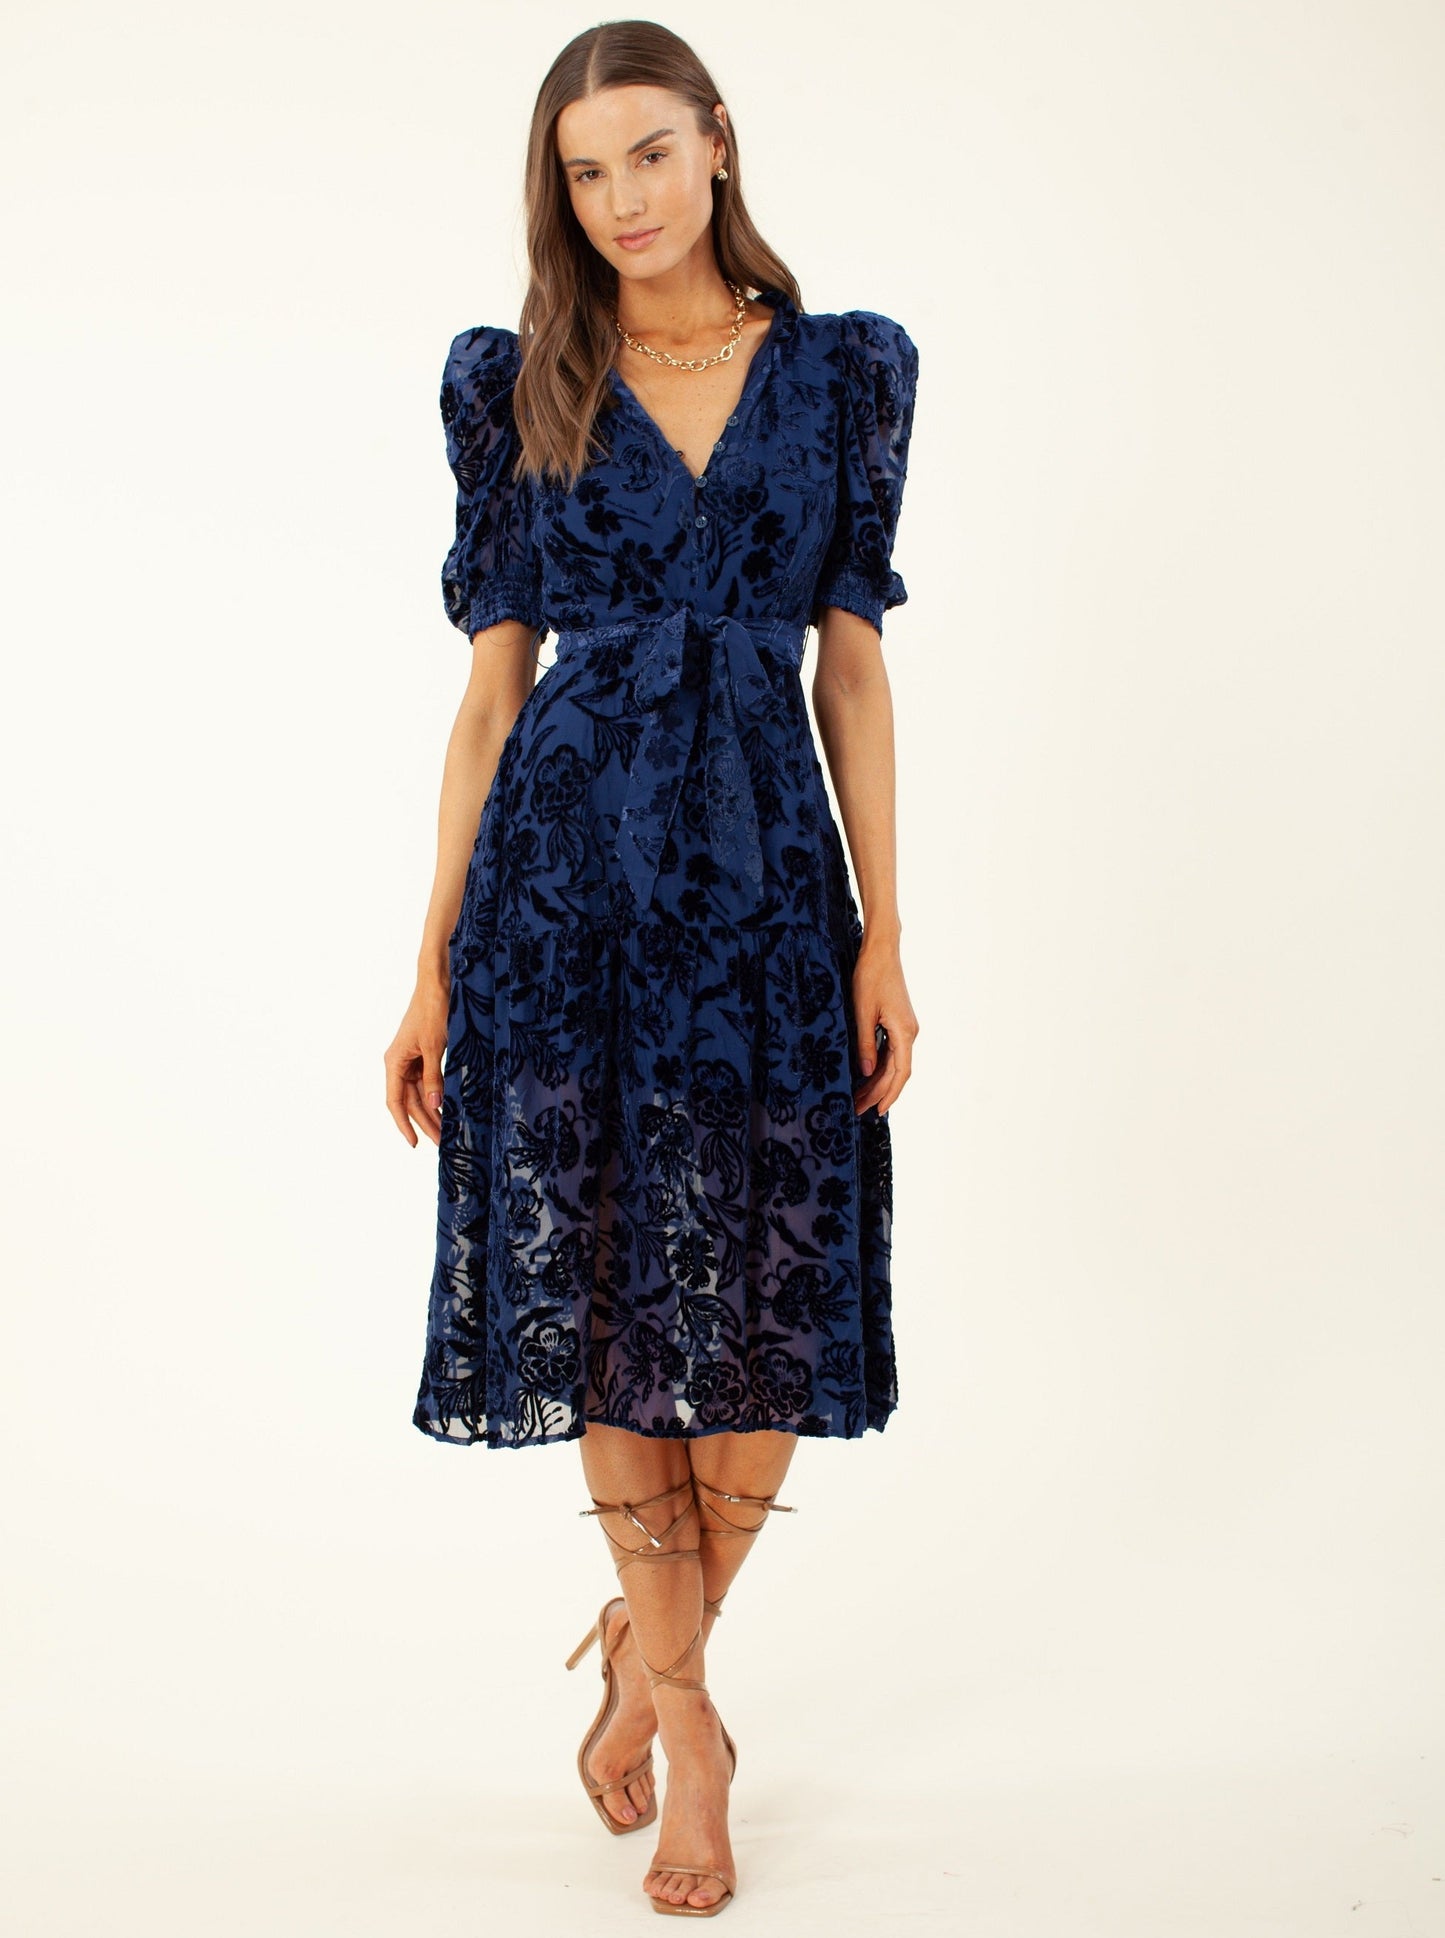 Hale Bob Kimbra Velvet Dress - Size S Available